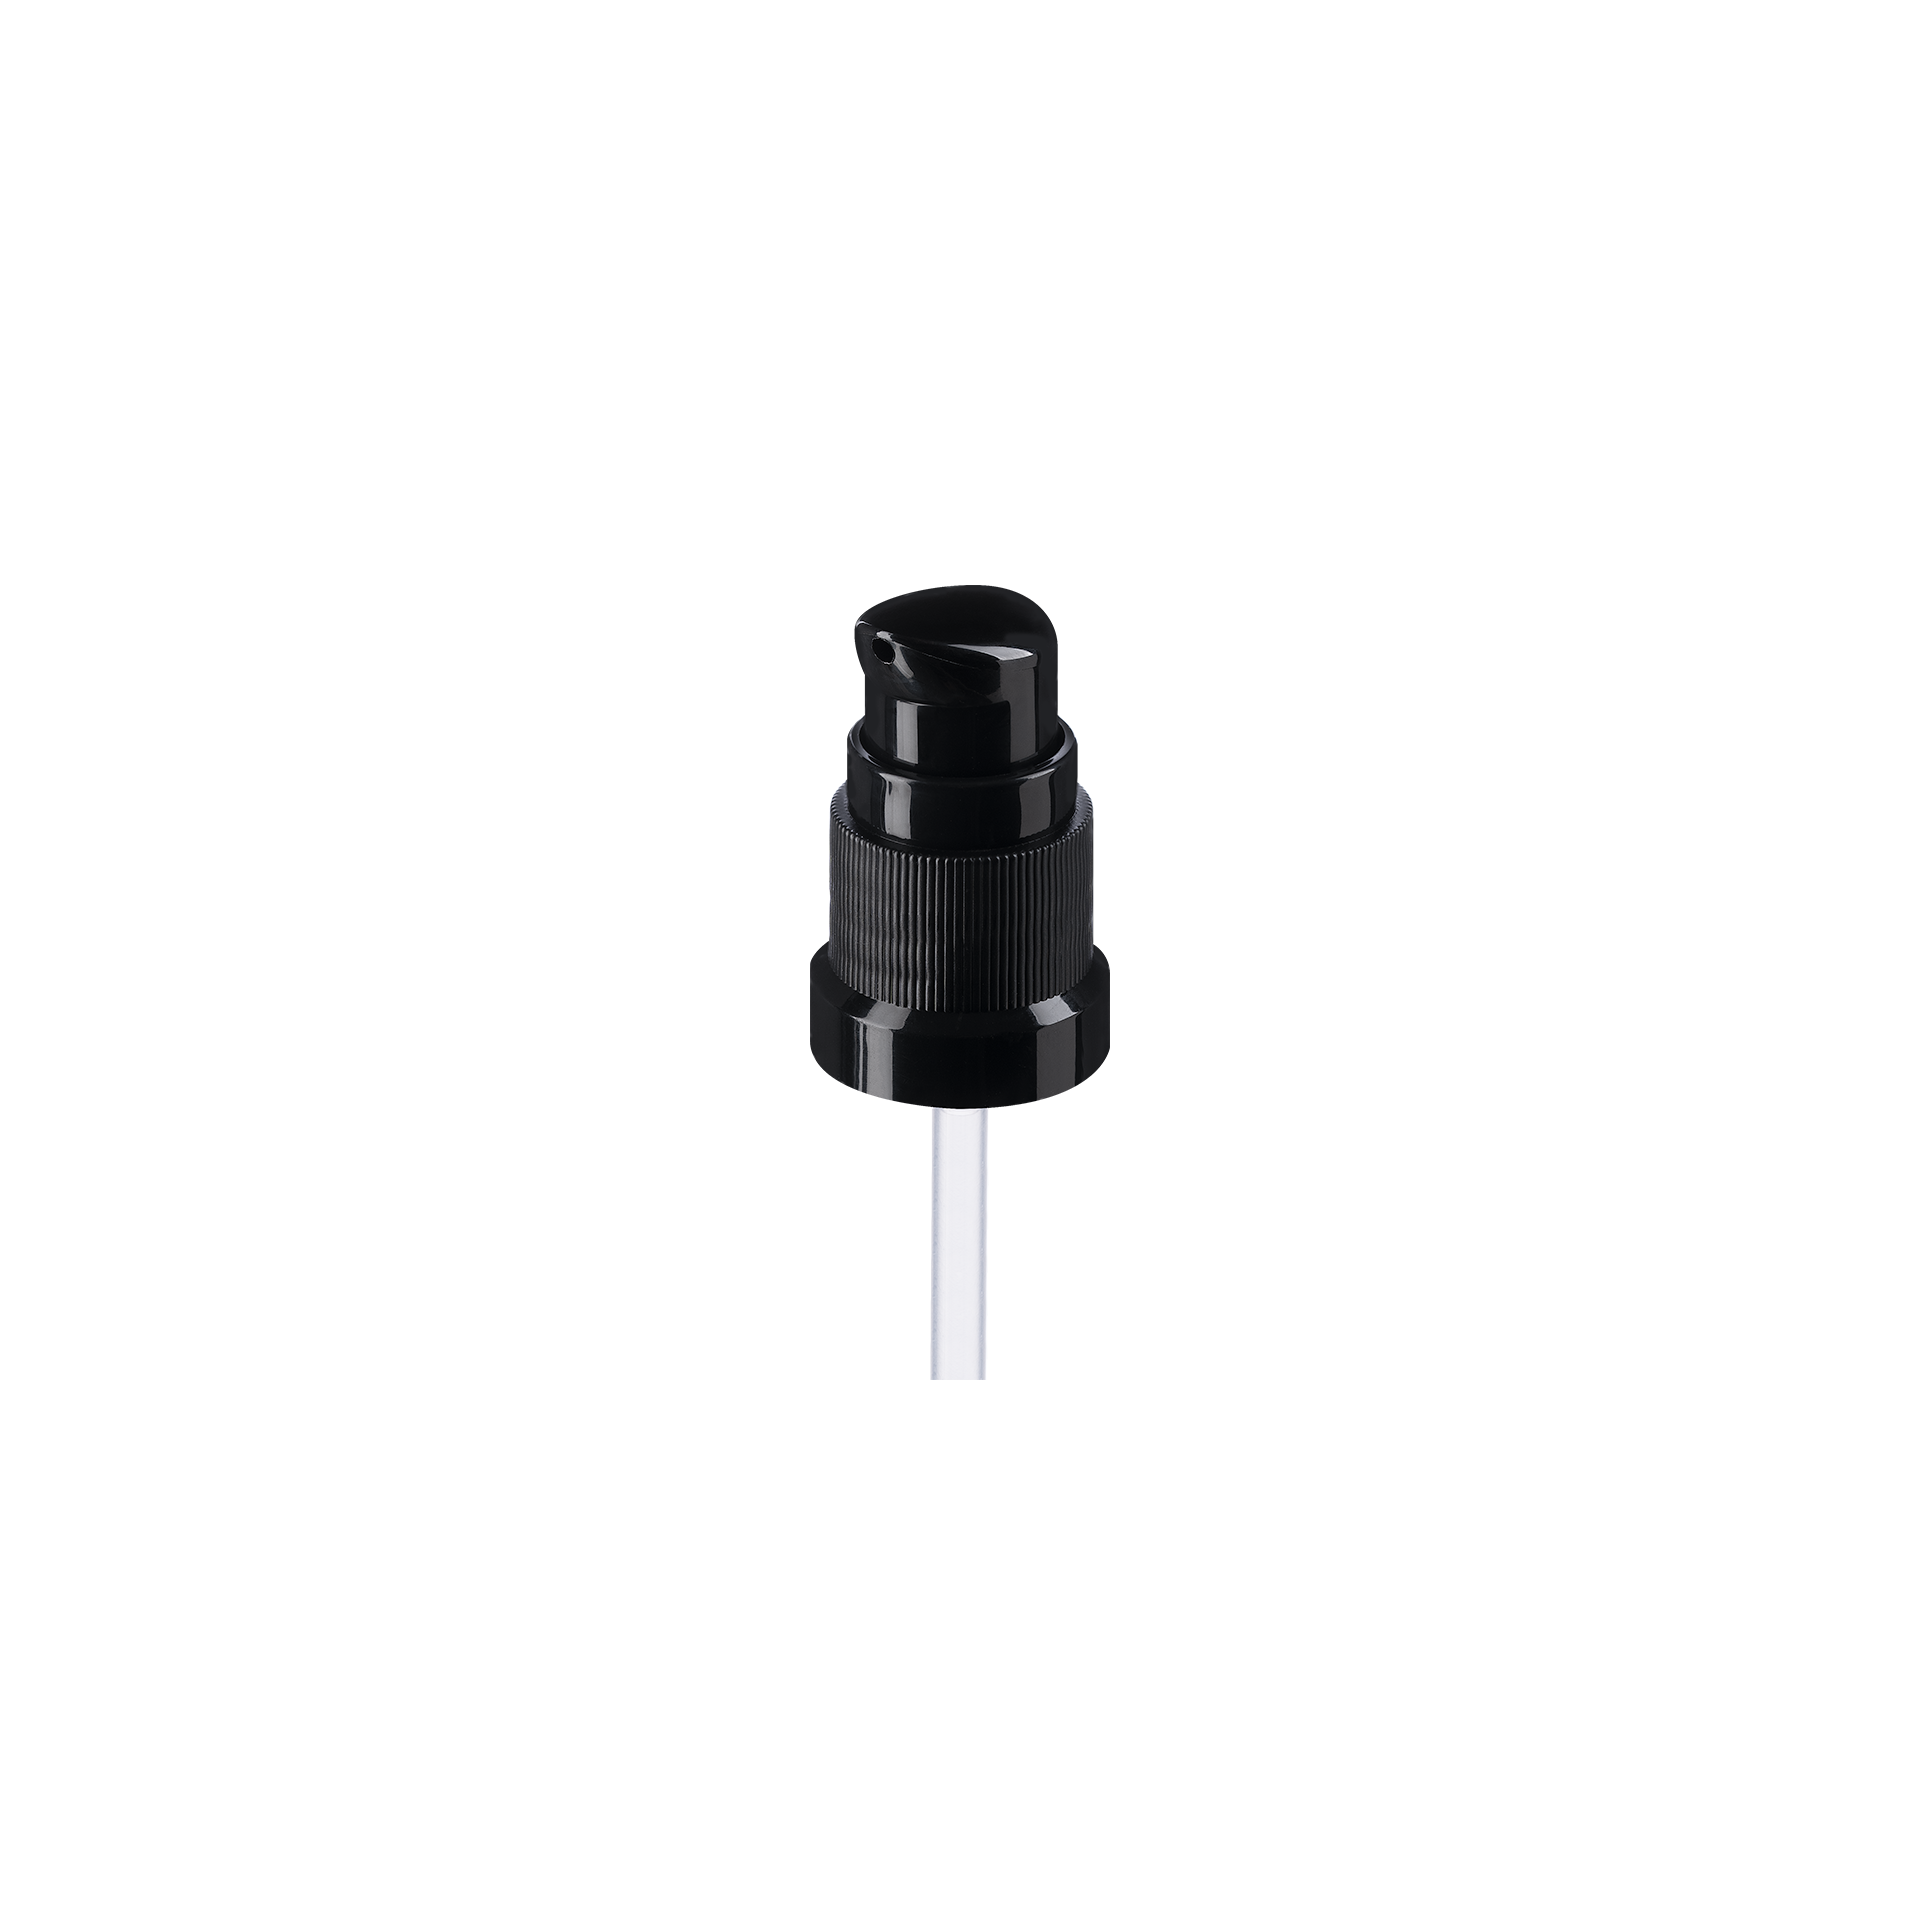 Lotion pump Metropolitan DIN18, PP, black, dose 0.15ml, black security clip (Jasmine 20)